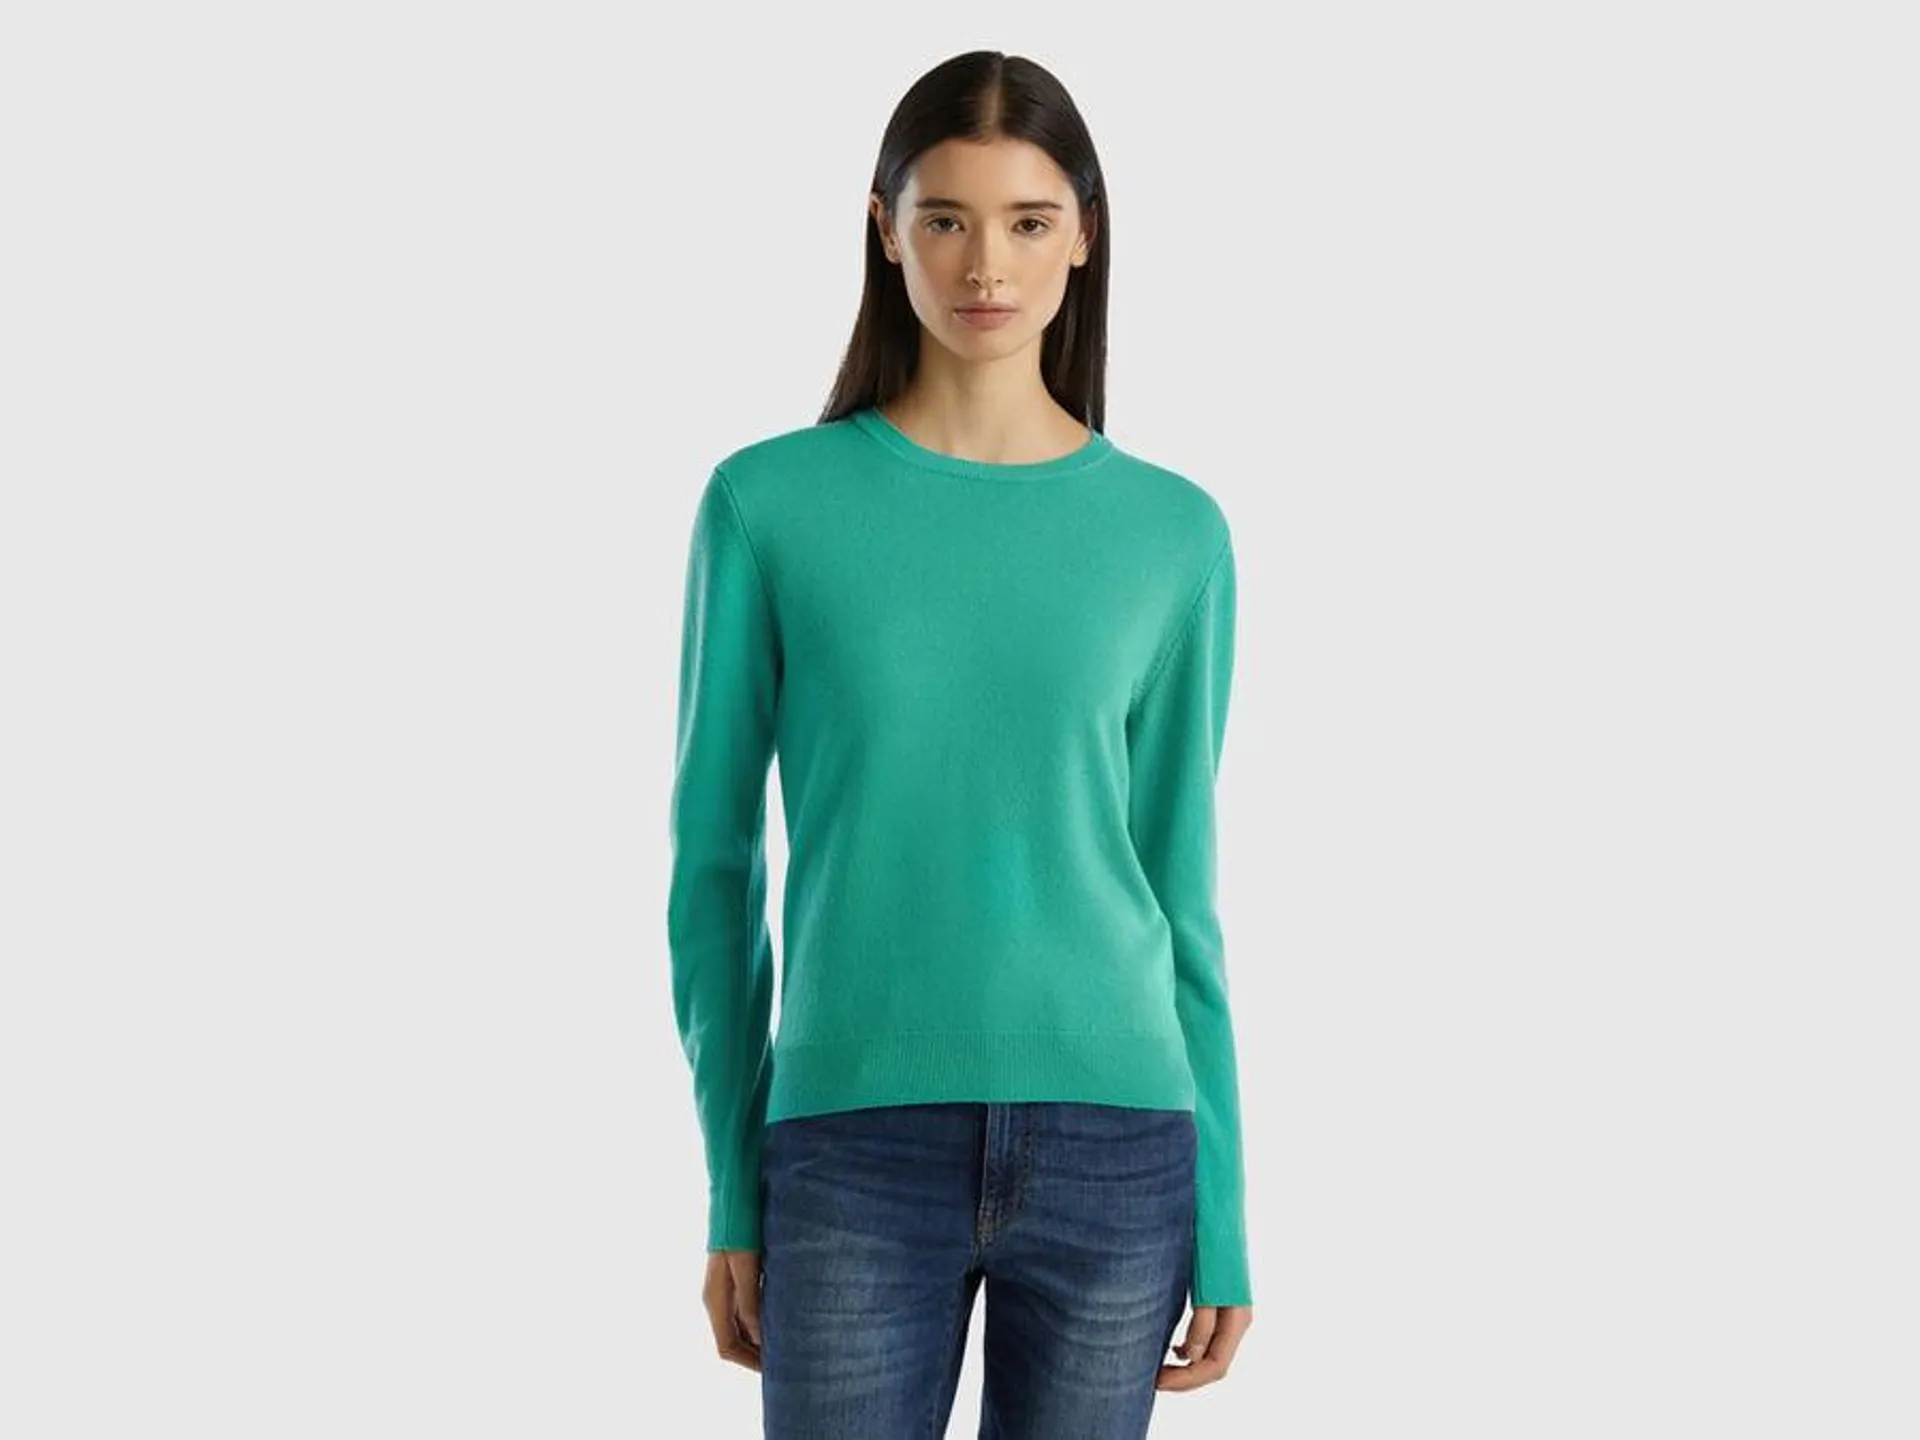 Light green crew neck sweater in Merino wool